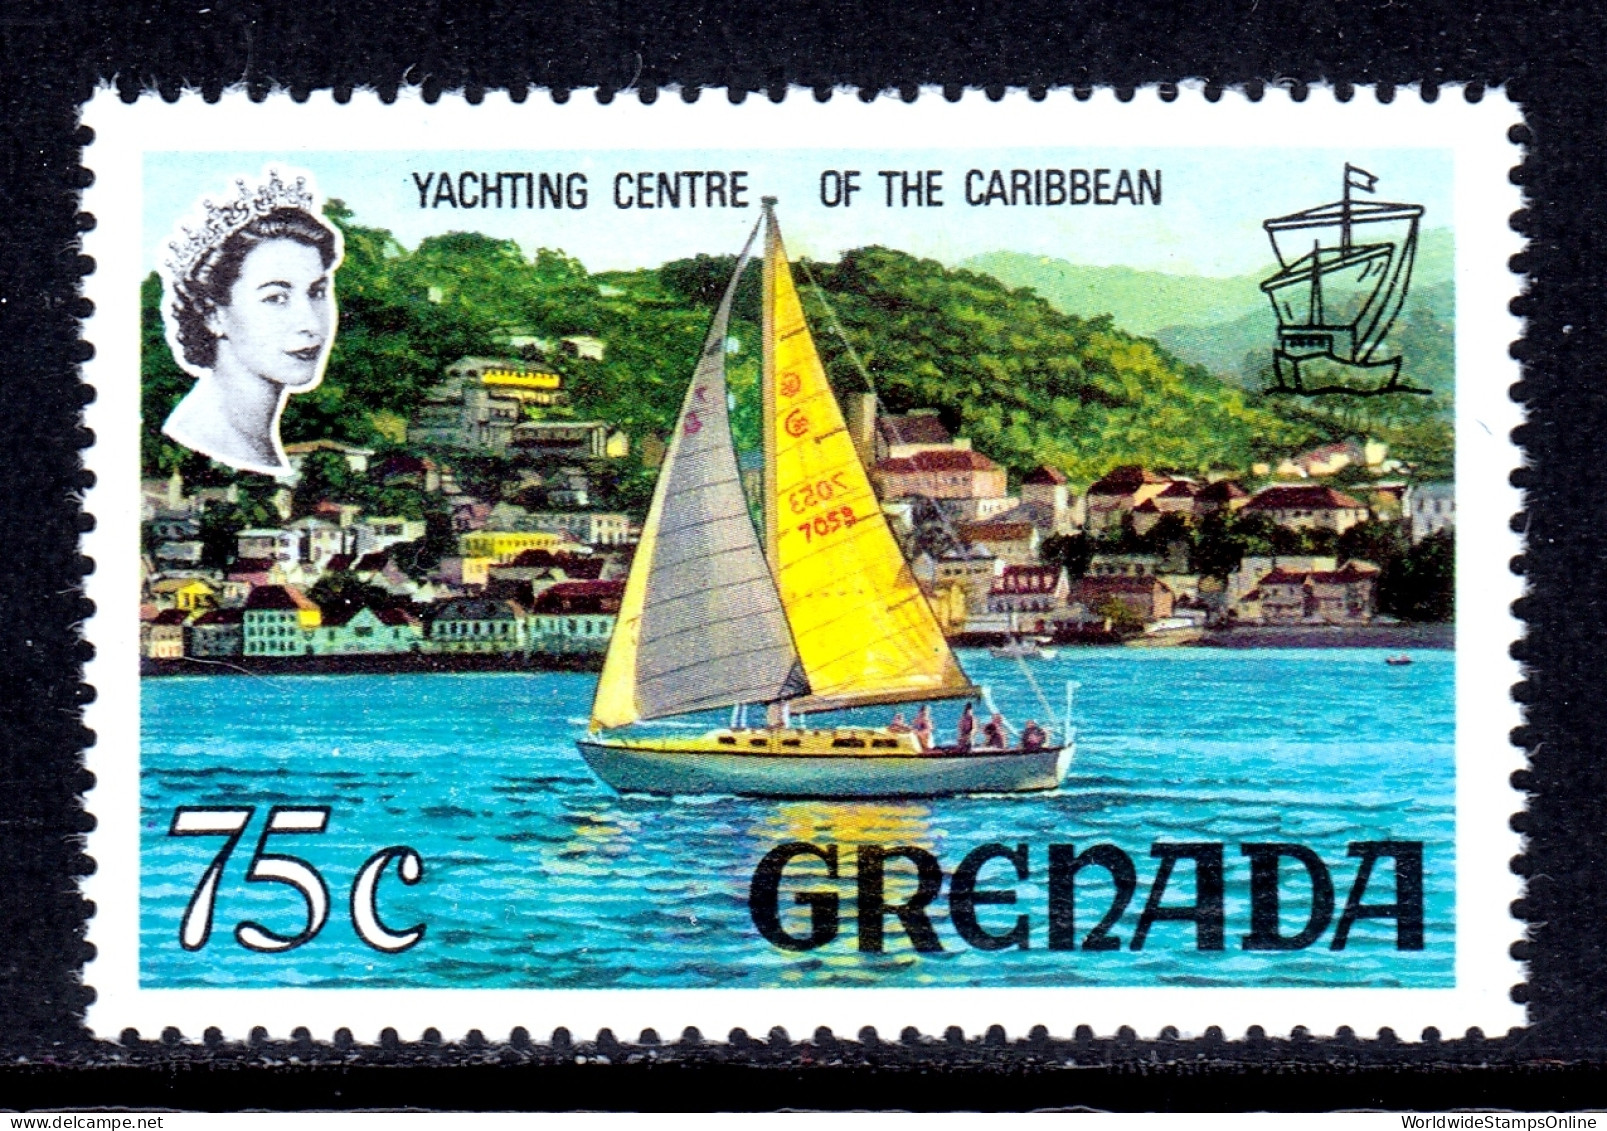 Grenada - Scott #305A - MNH - SCV $10 - Grenada (...-1974)